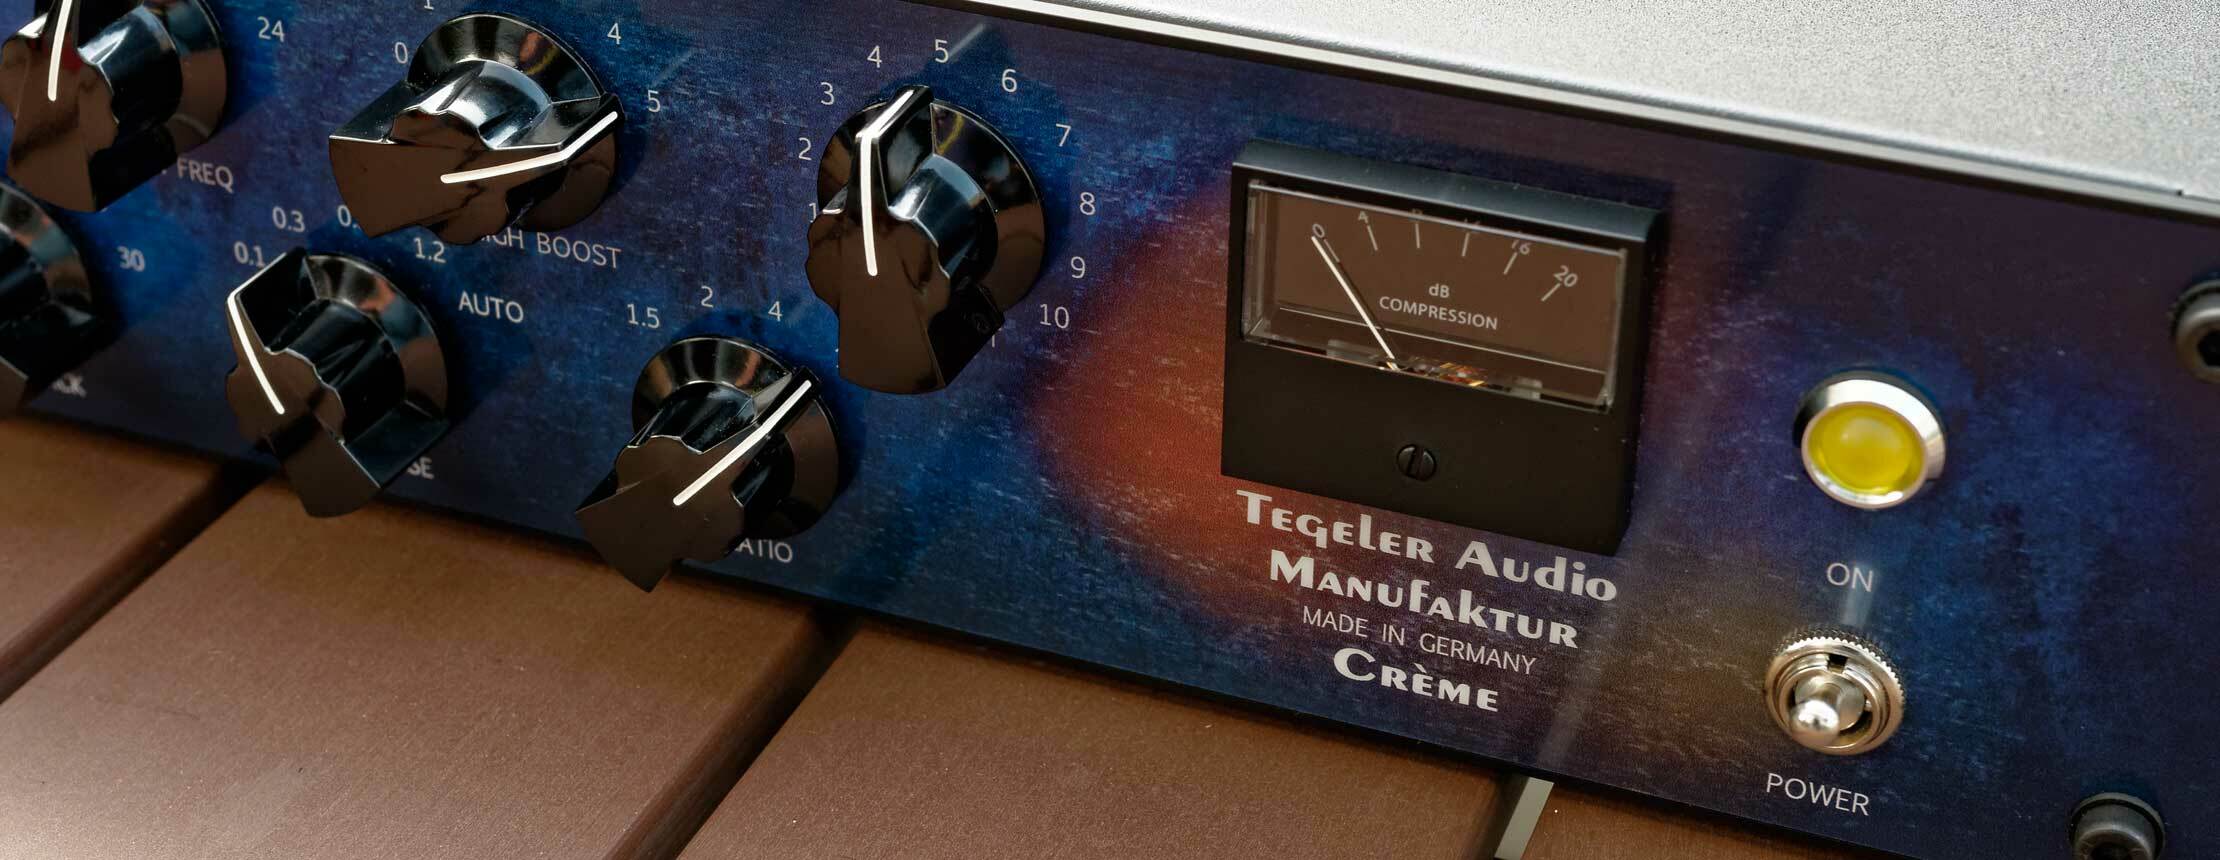 Tegeler Audio Manufaktur CrÈme - Kompressor/Limiter Gate - Main picture